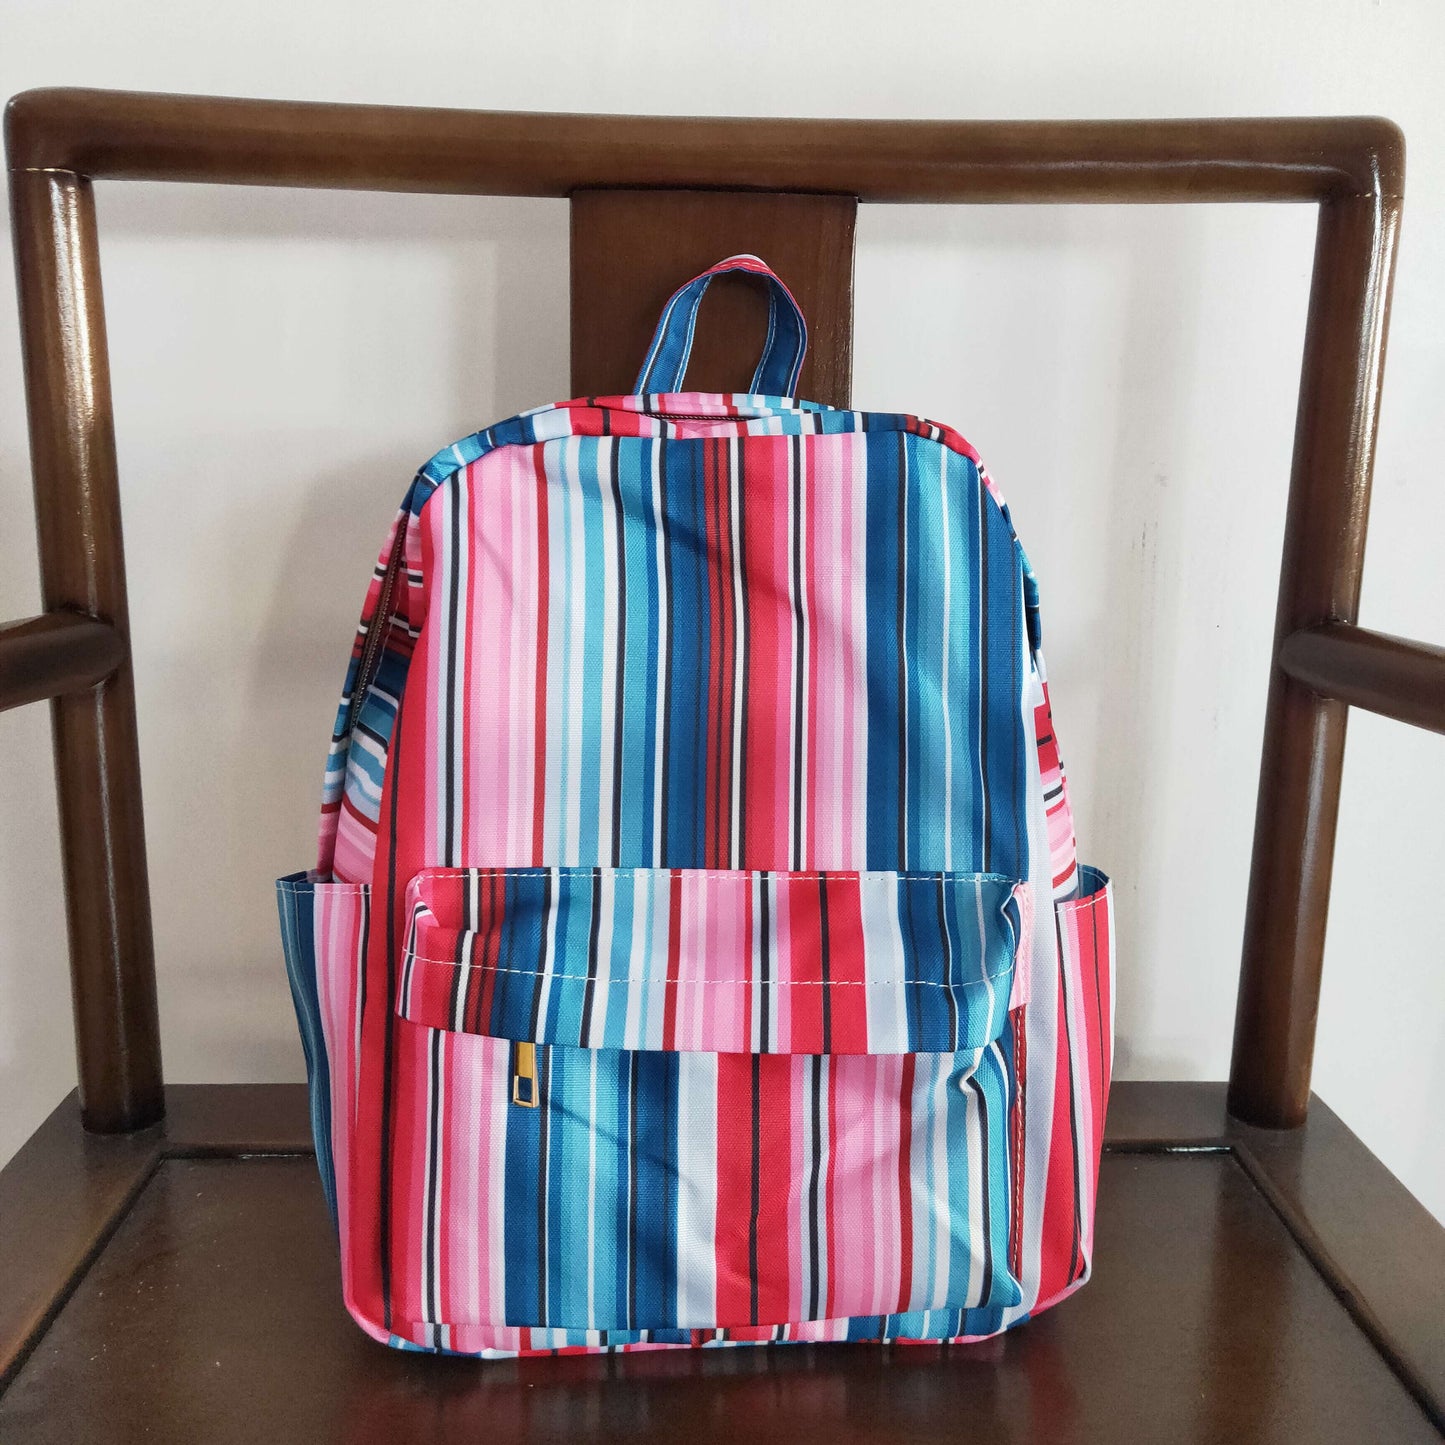 shapes kids school backpack